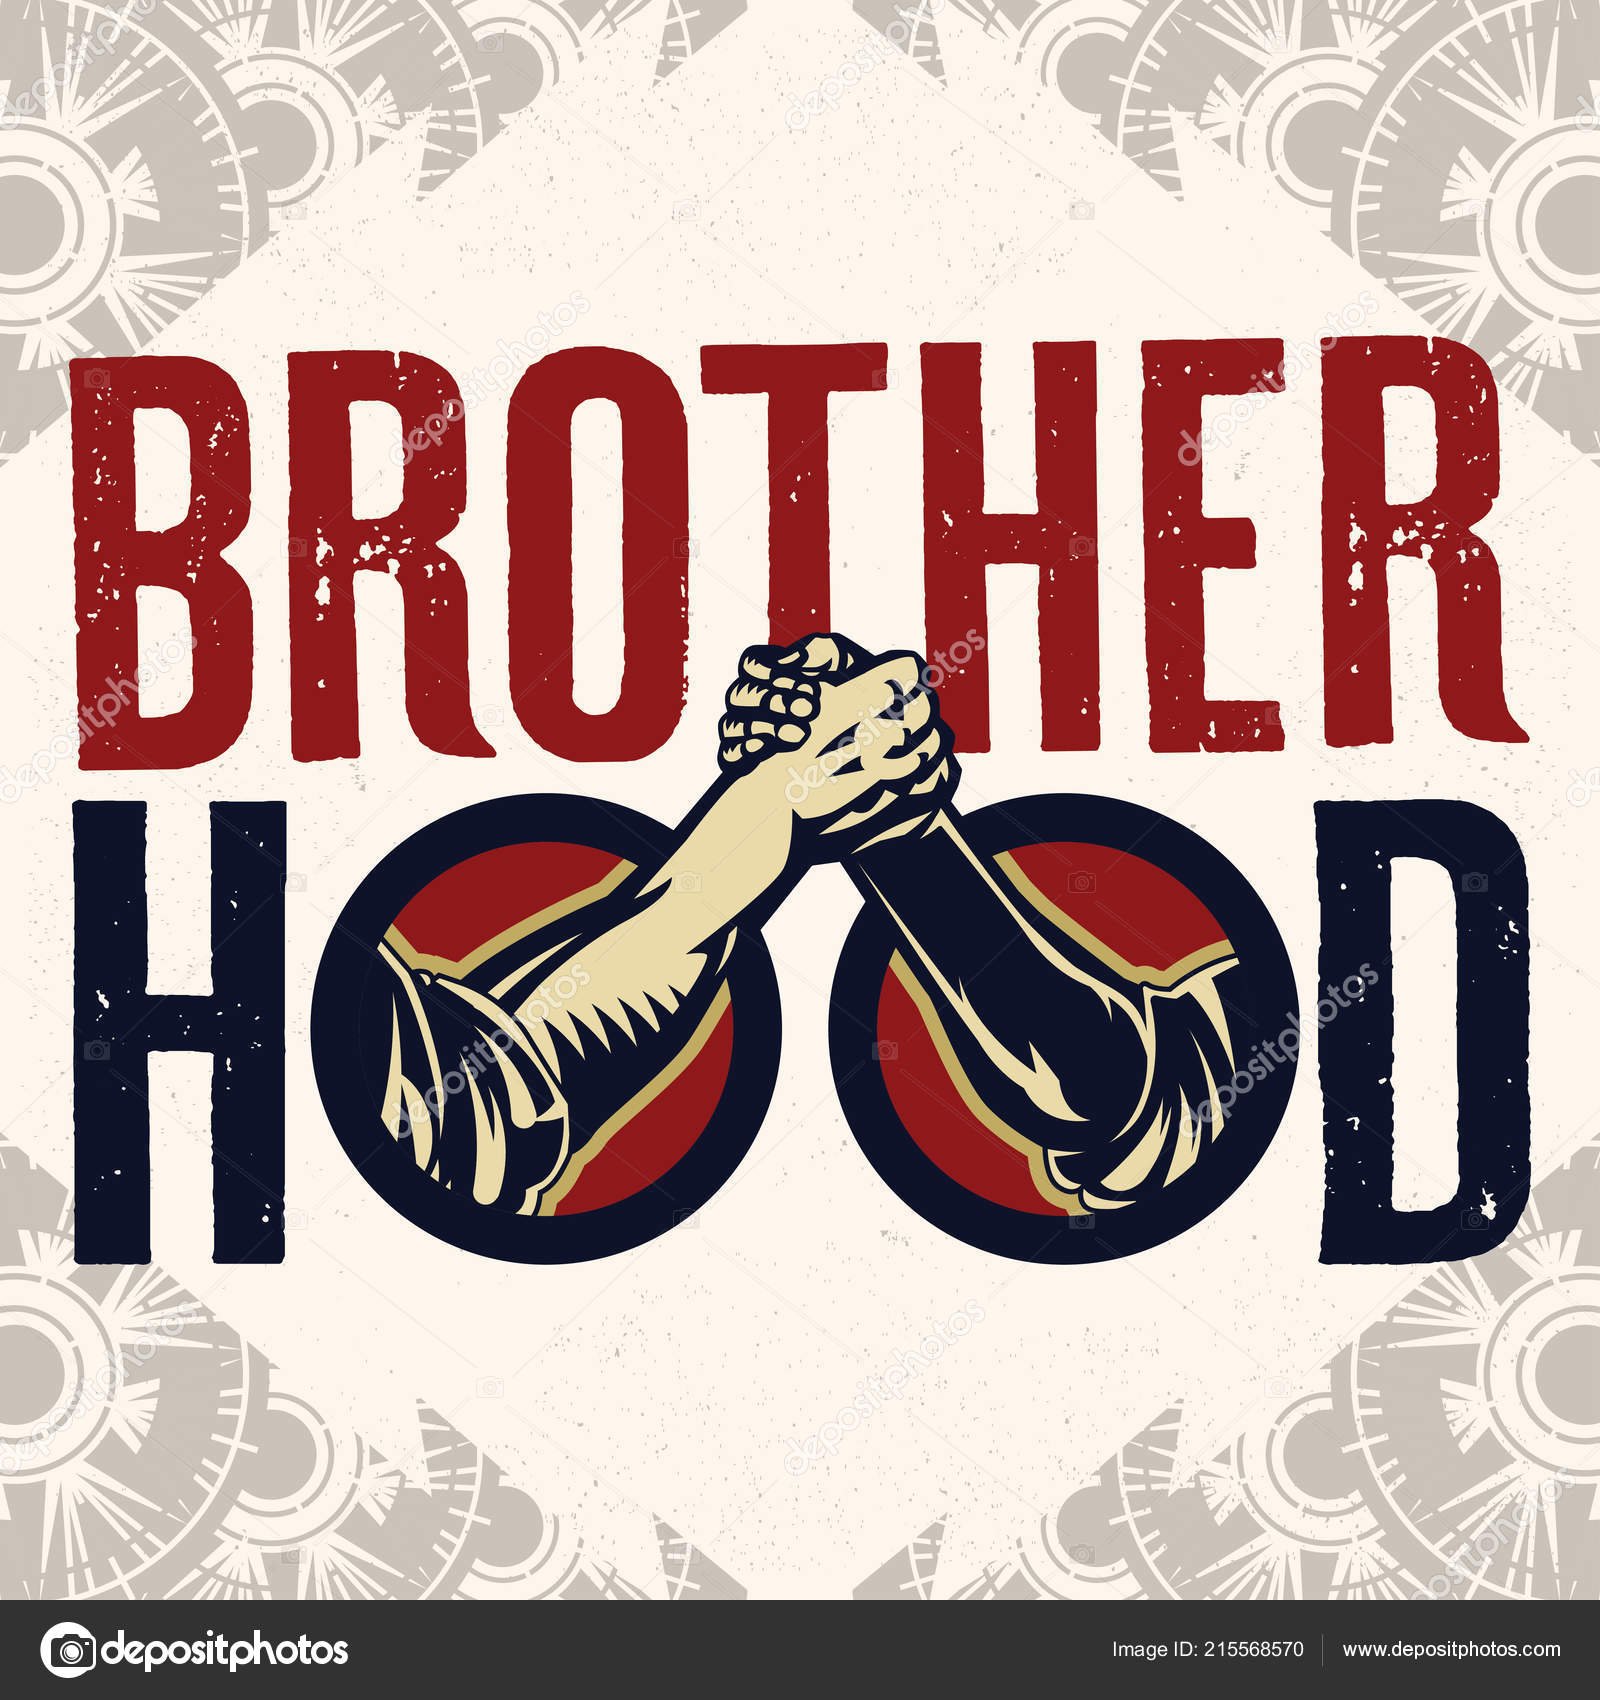 The BROTHERHOOD XBL